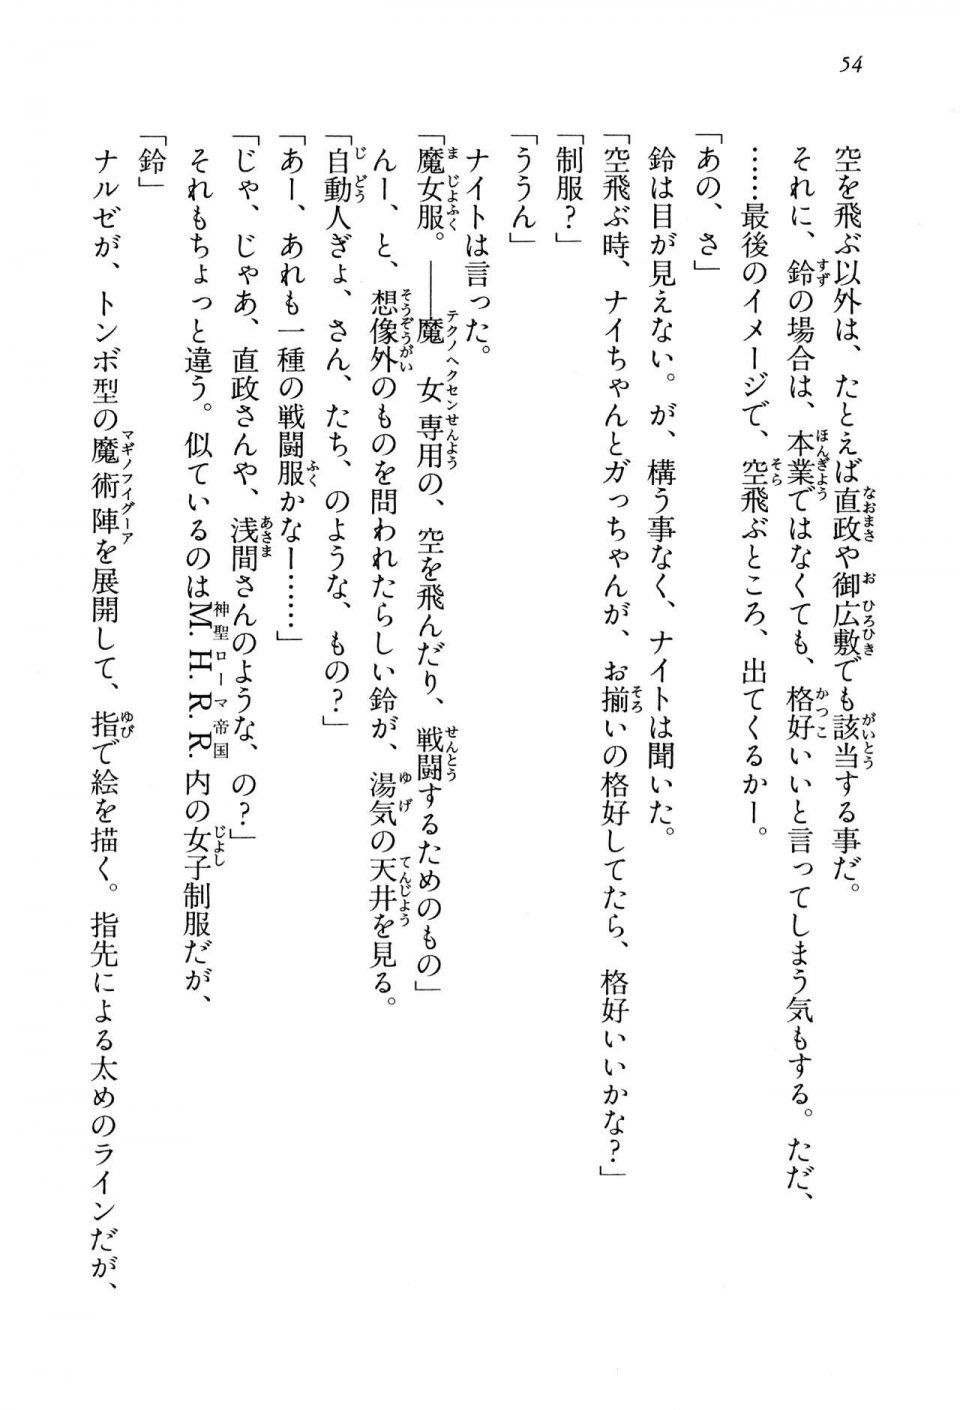 Kyoukai Senjou no Horizon BD Special Mininovel Vol 3(2A) - Photo #58